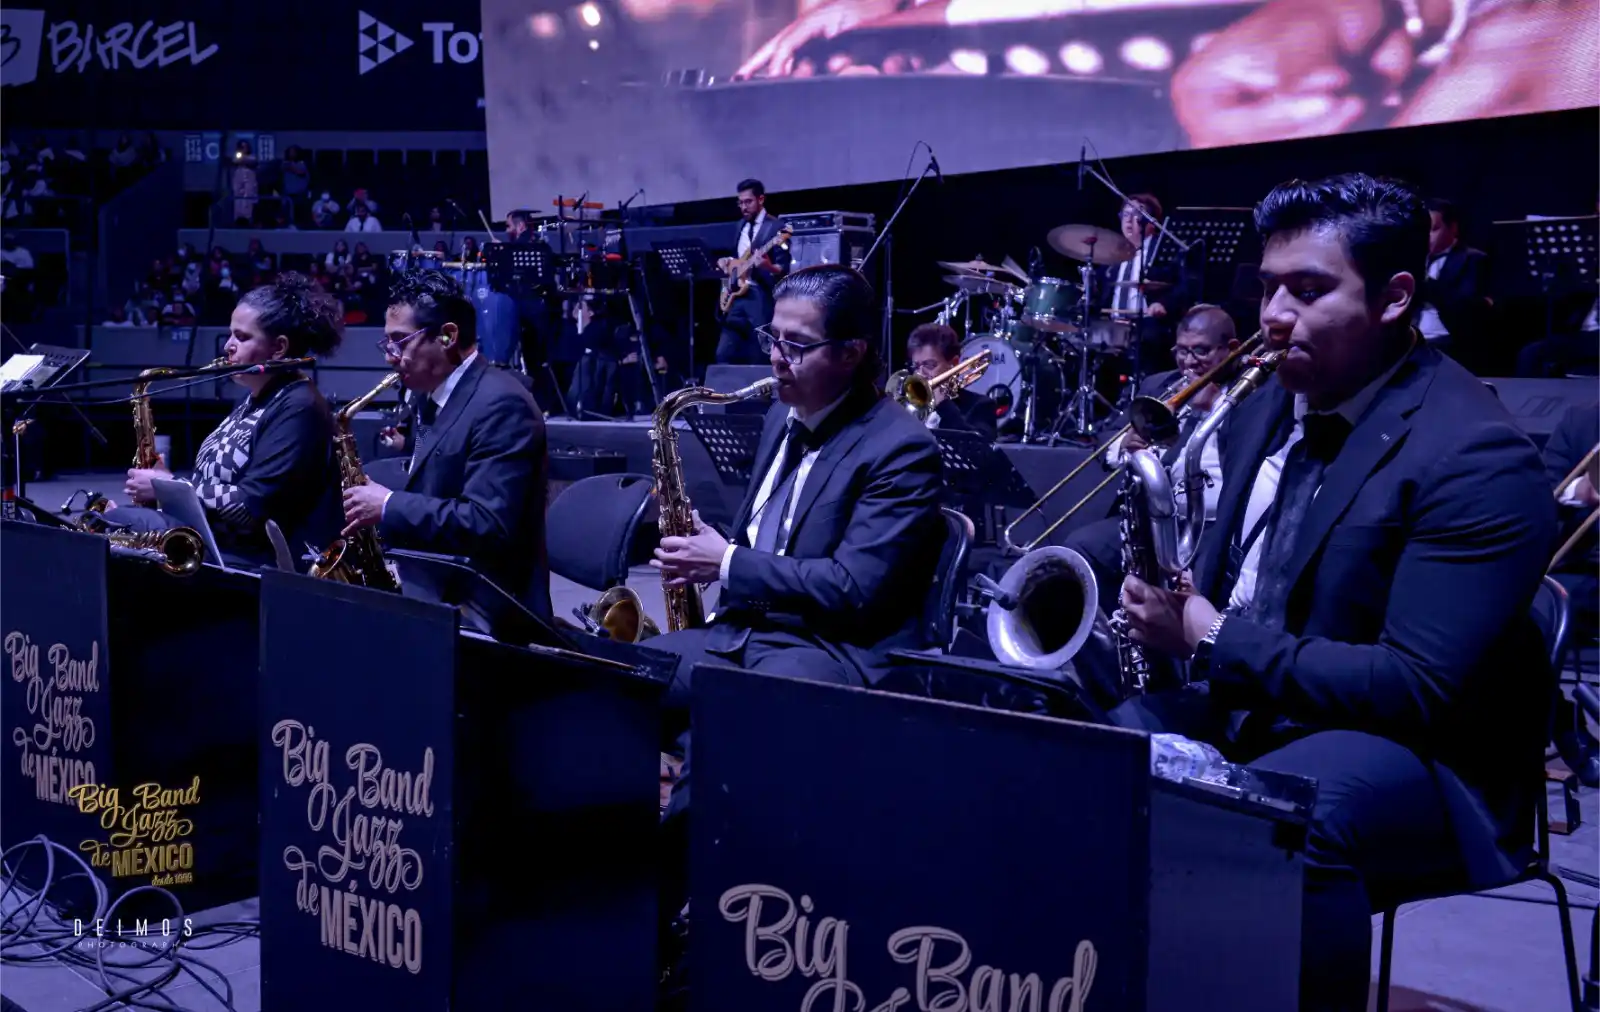 Big Band Jazz